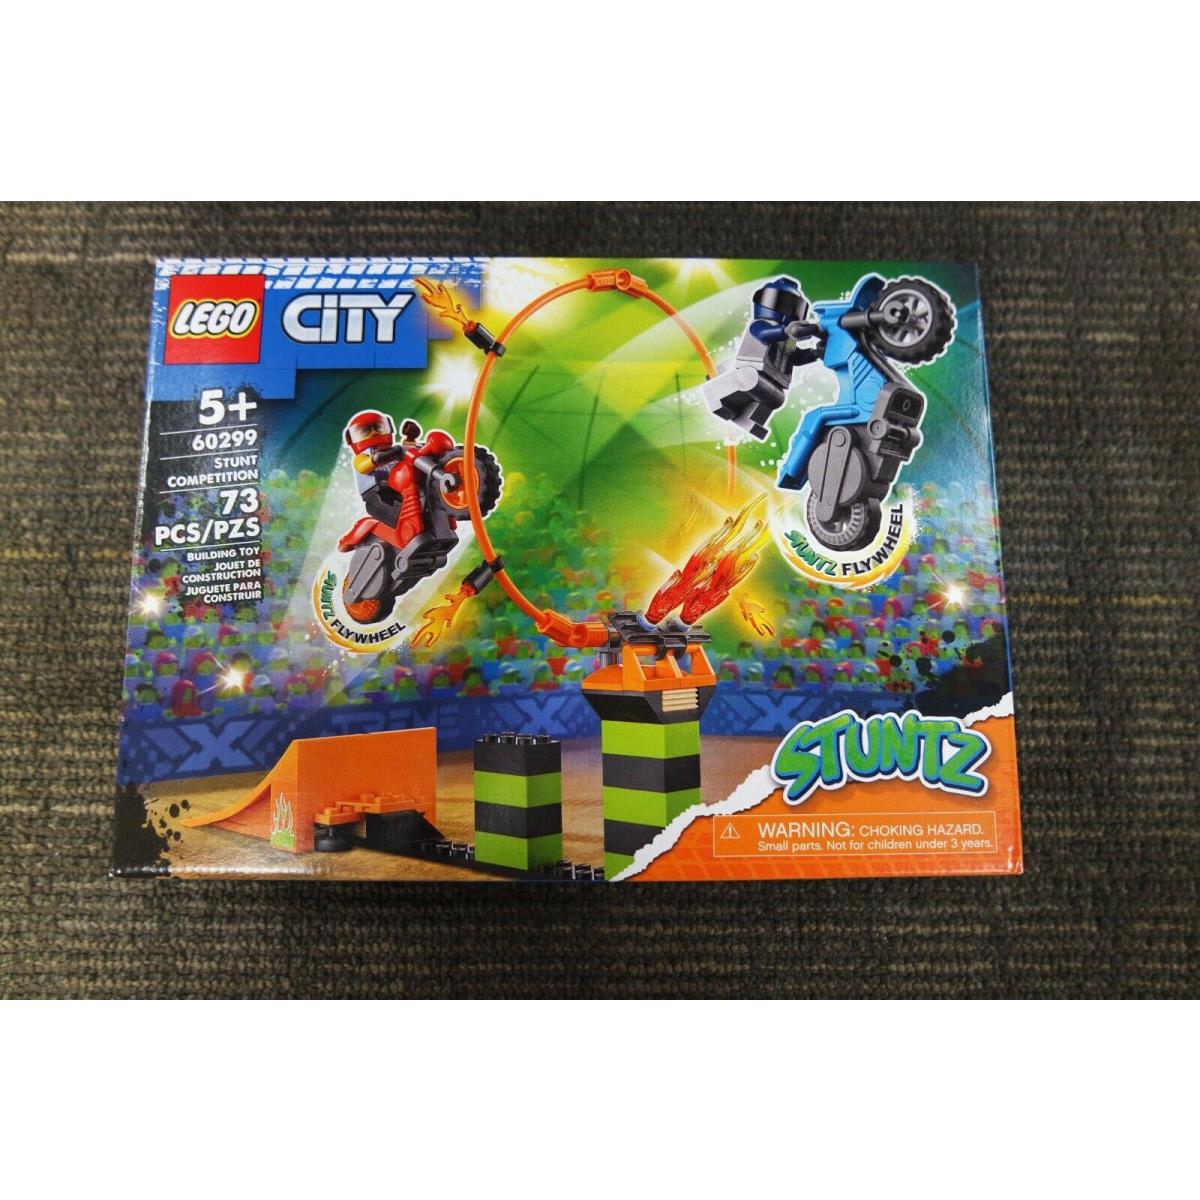 Lego 60299 City Stunt Competition Building Toy 73 Pcs